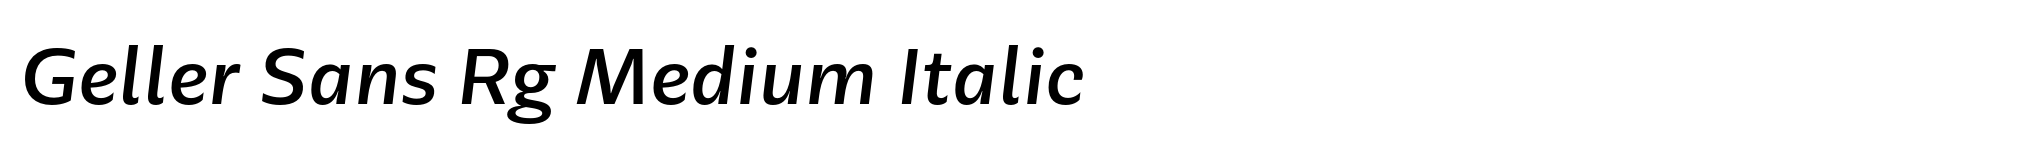 Geller Sans Rg Medium Italic image